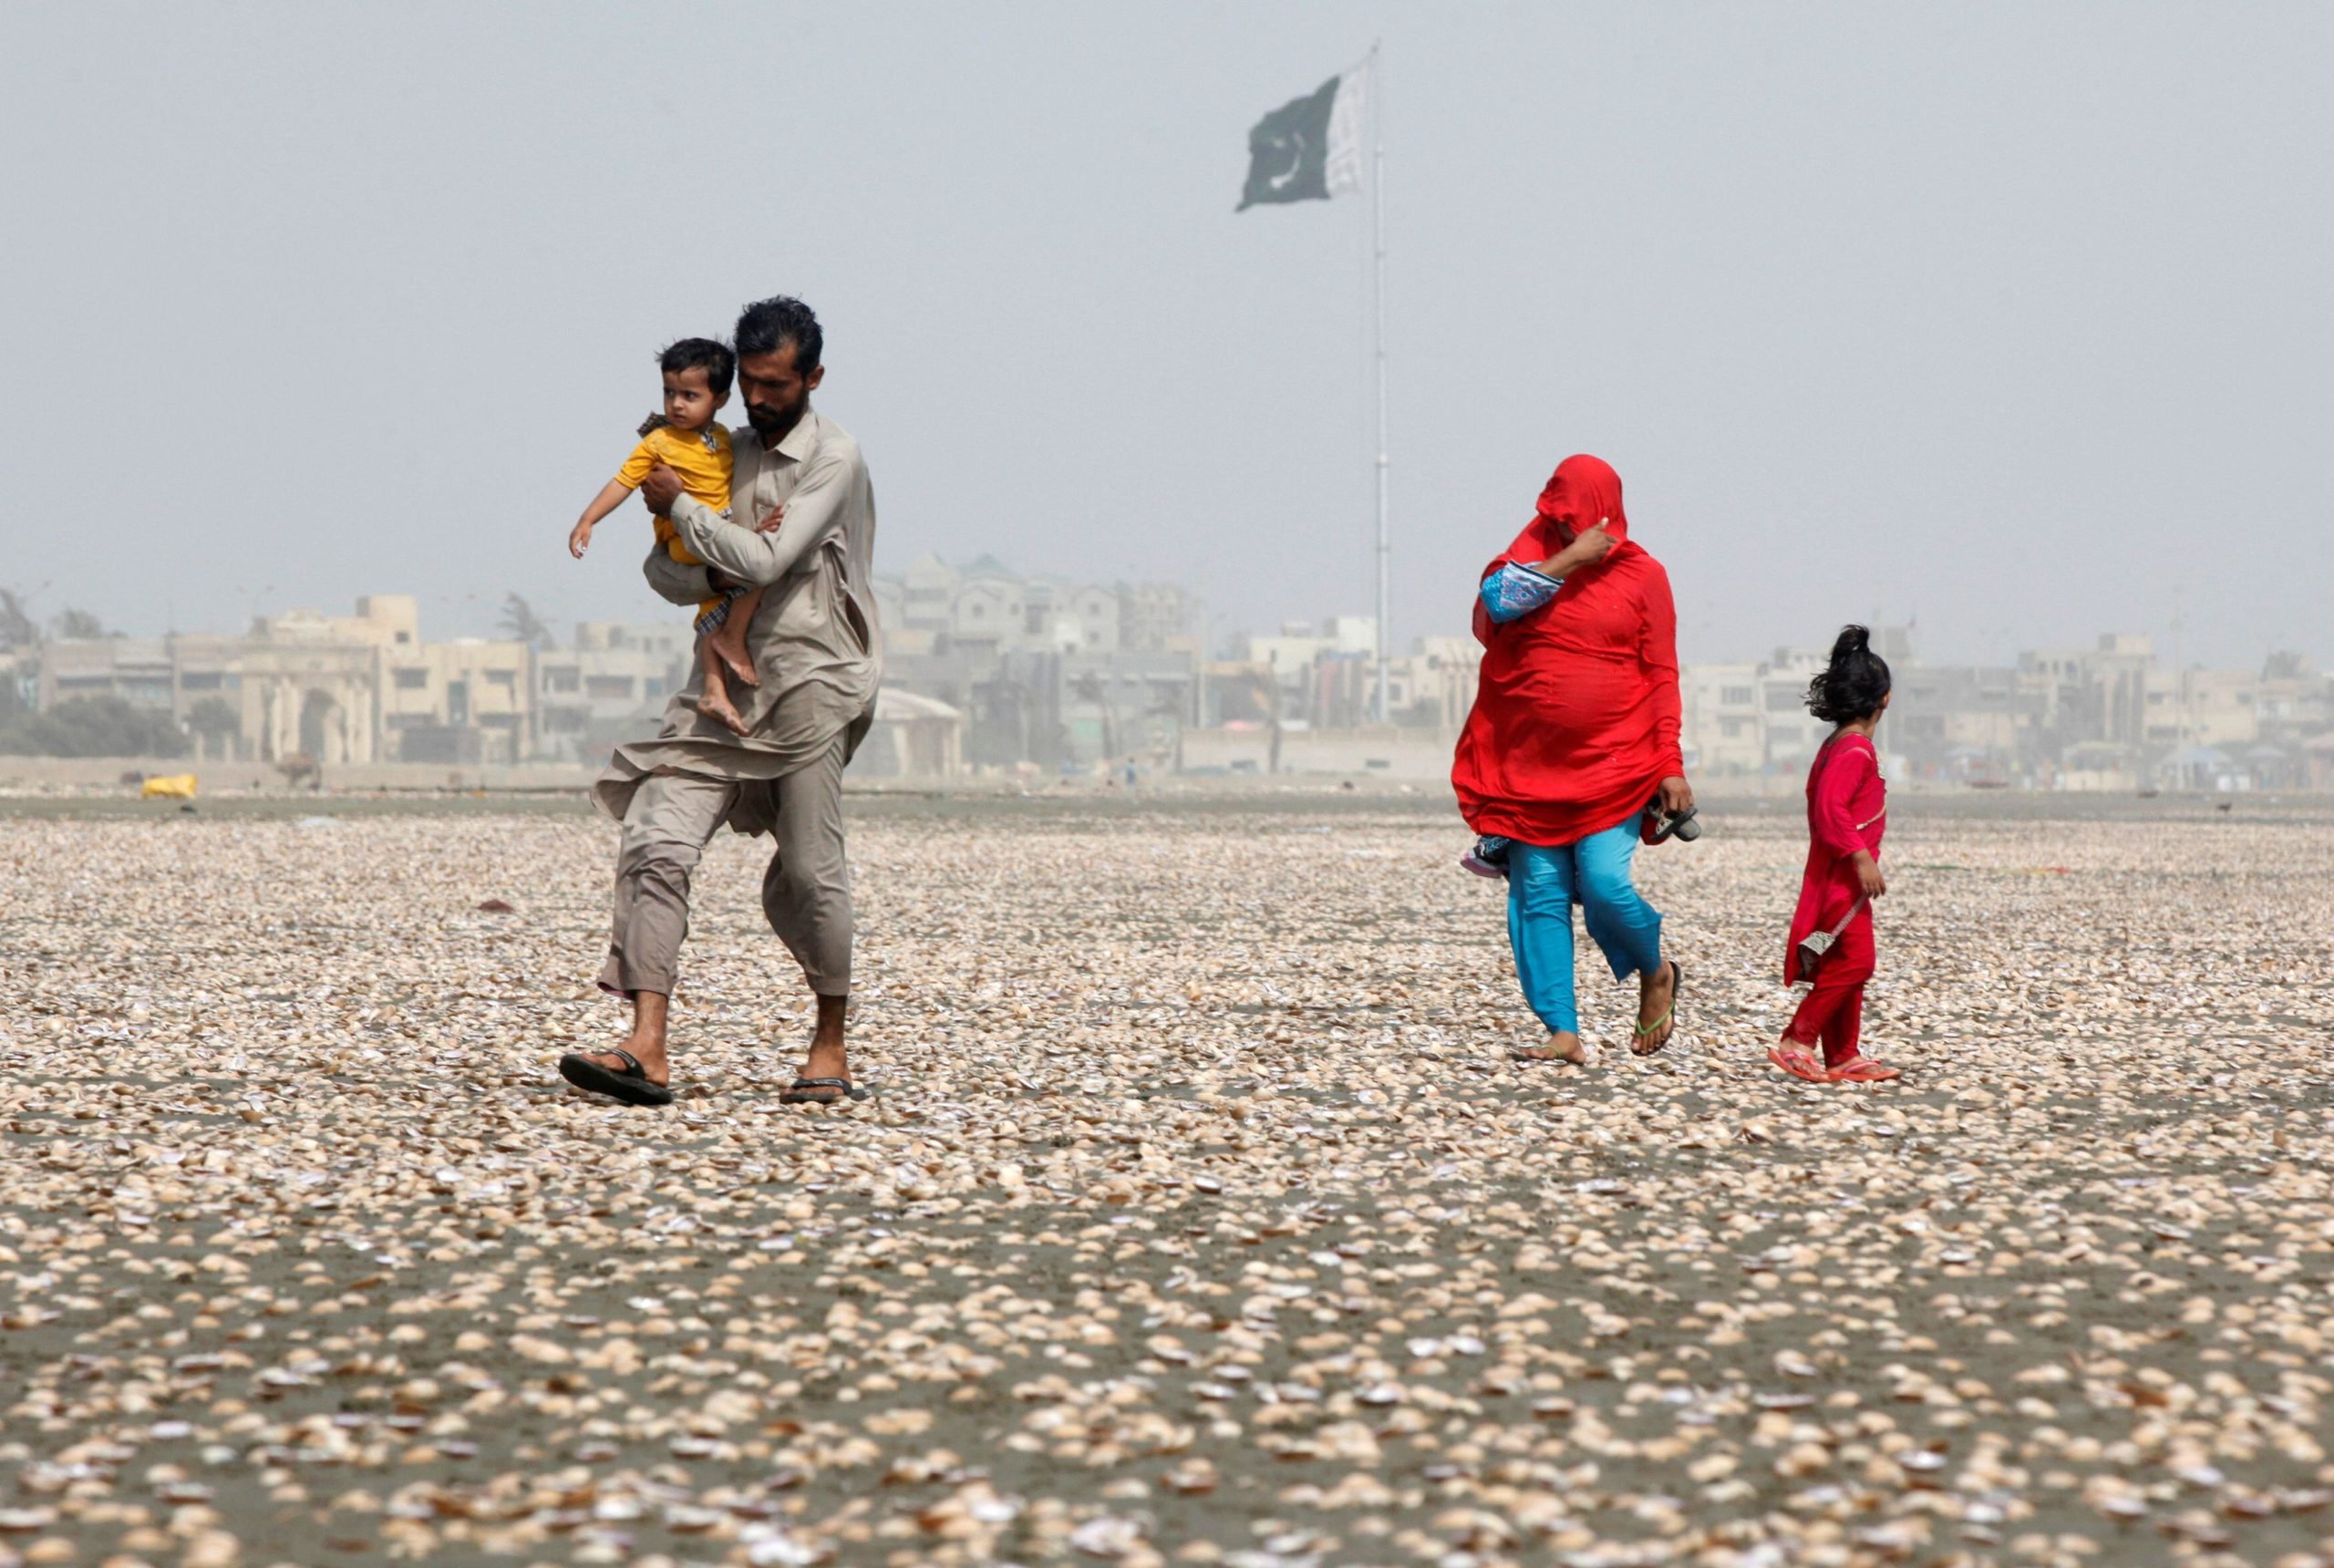 <p>مئی 2016 میں پاکستان کے شہر کراچی میں ایک کنبہ گرمی کے دن ساحل کے ساتھ ساتھ چہل قدمی کر رہا ہے (تصویر بشکریہ روٹرز / اختر سومرو)</p>